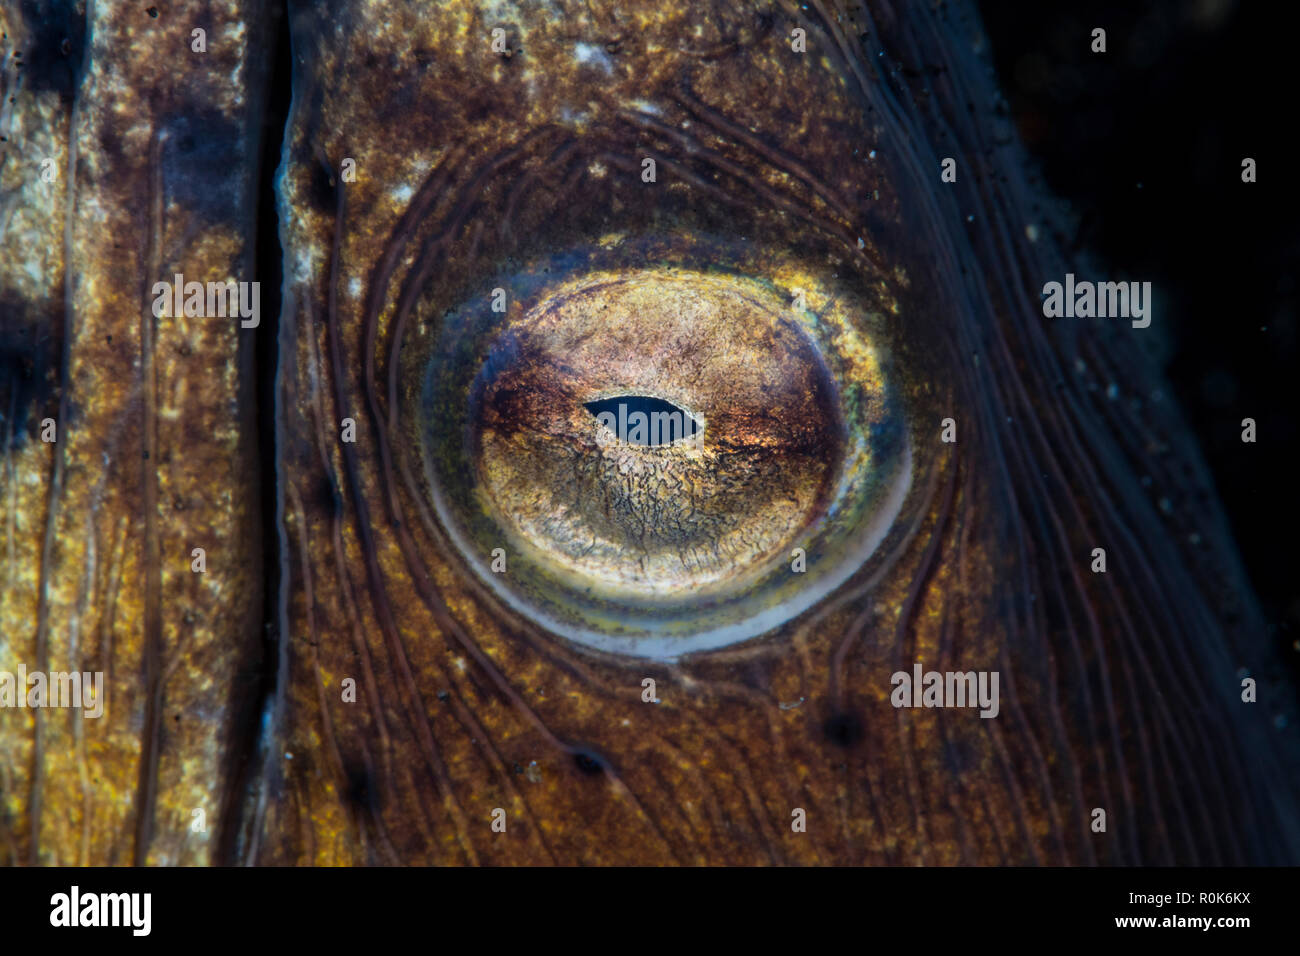 Detail of the eye on a blacksaddle snake eel. Stock Photo